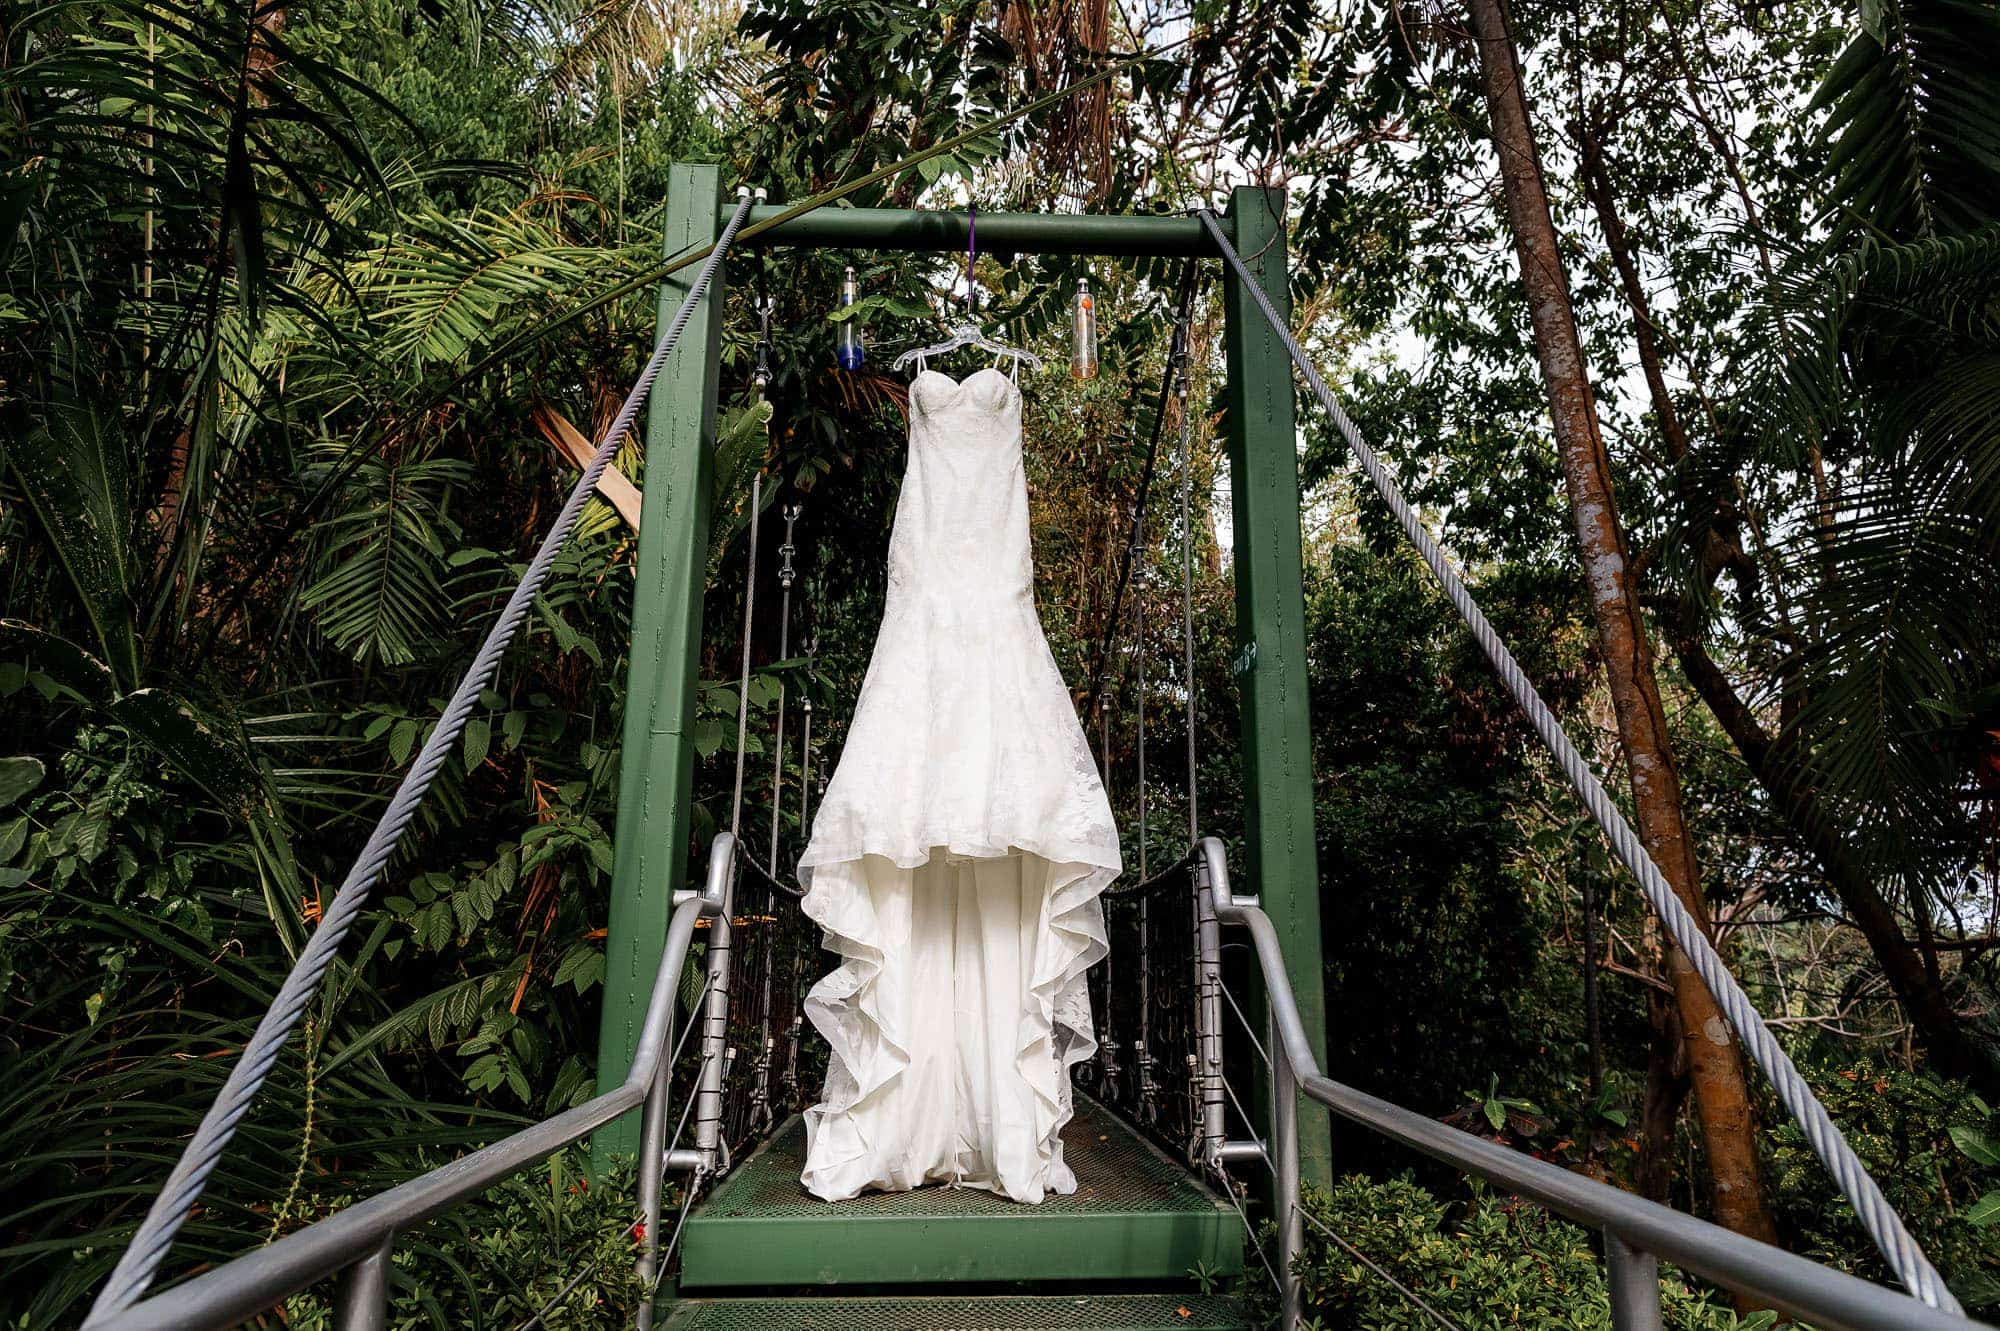 The elegant formal wedding gown hanging in the hanging bridge at Costa Verde